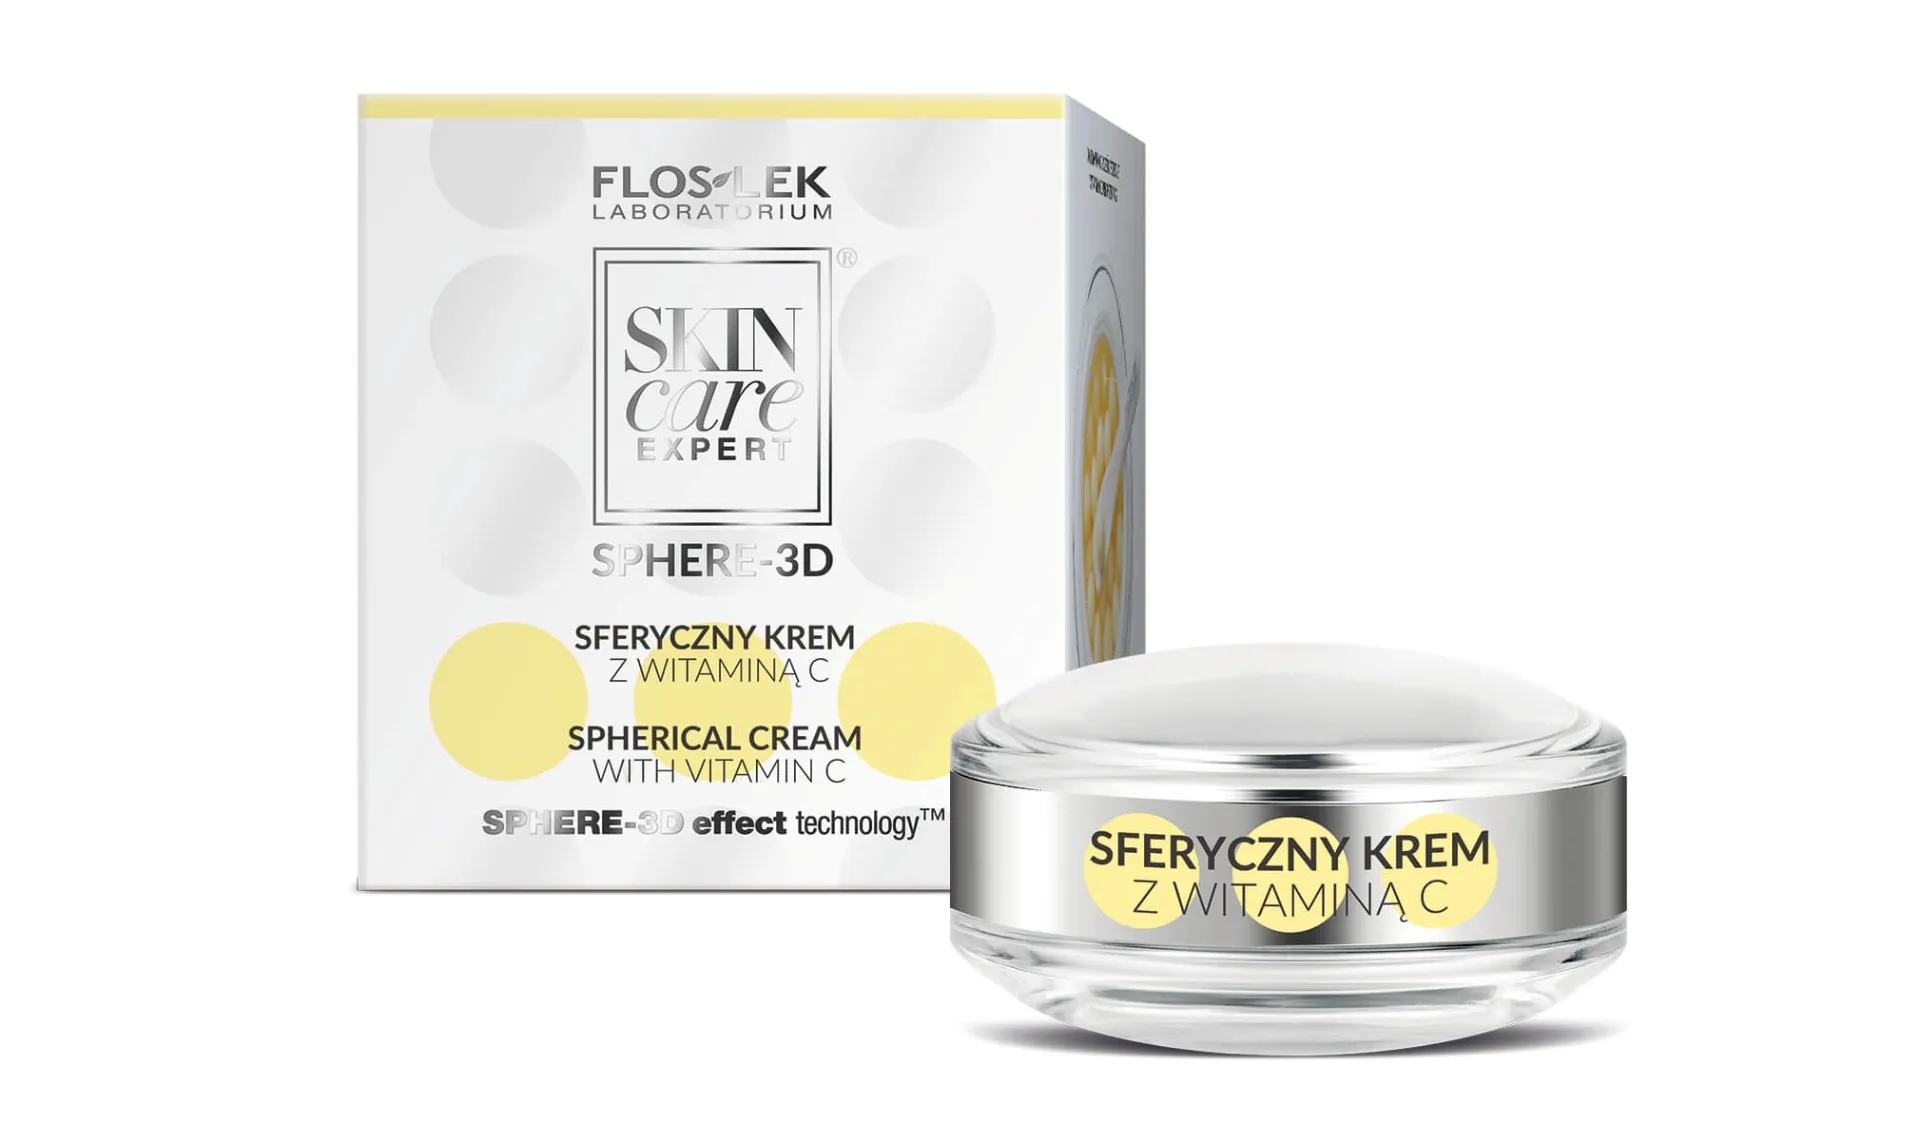 Flos-Lek Skin Care Expert Sphere 3D, sferyczny krem z witaminą C, 11,5 g